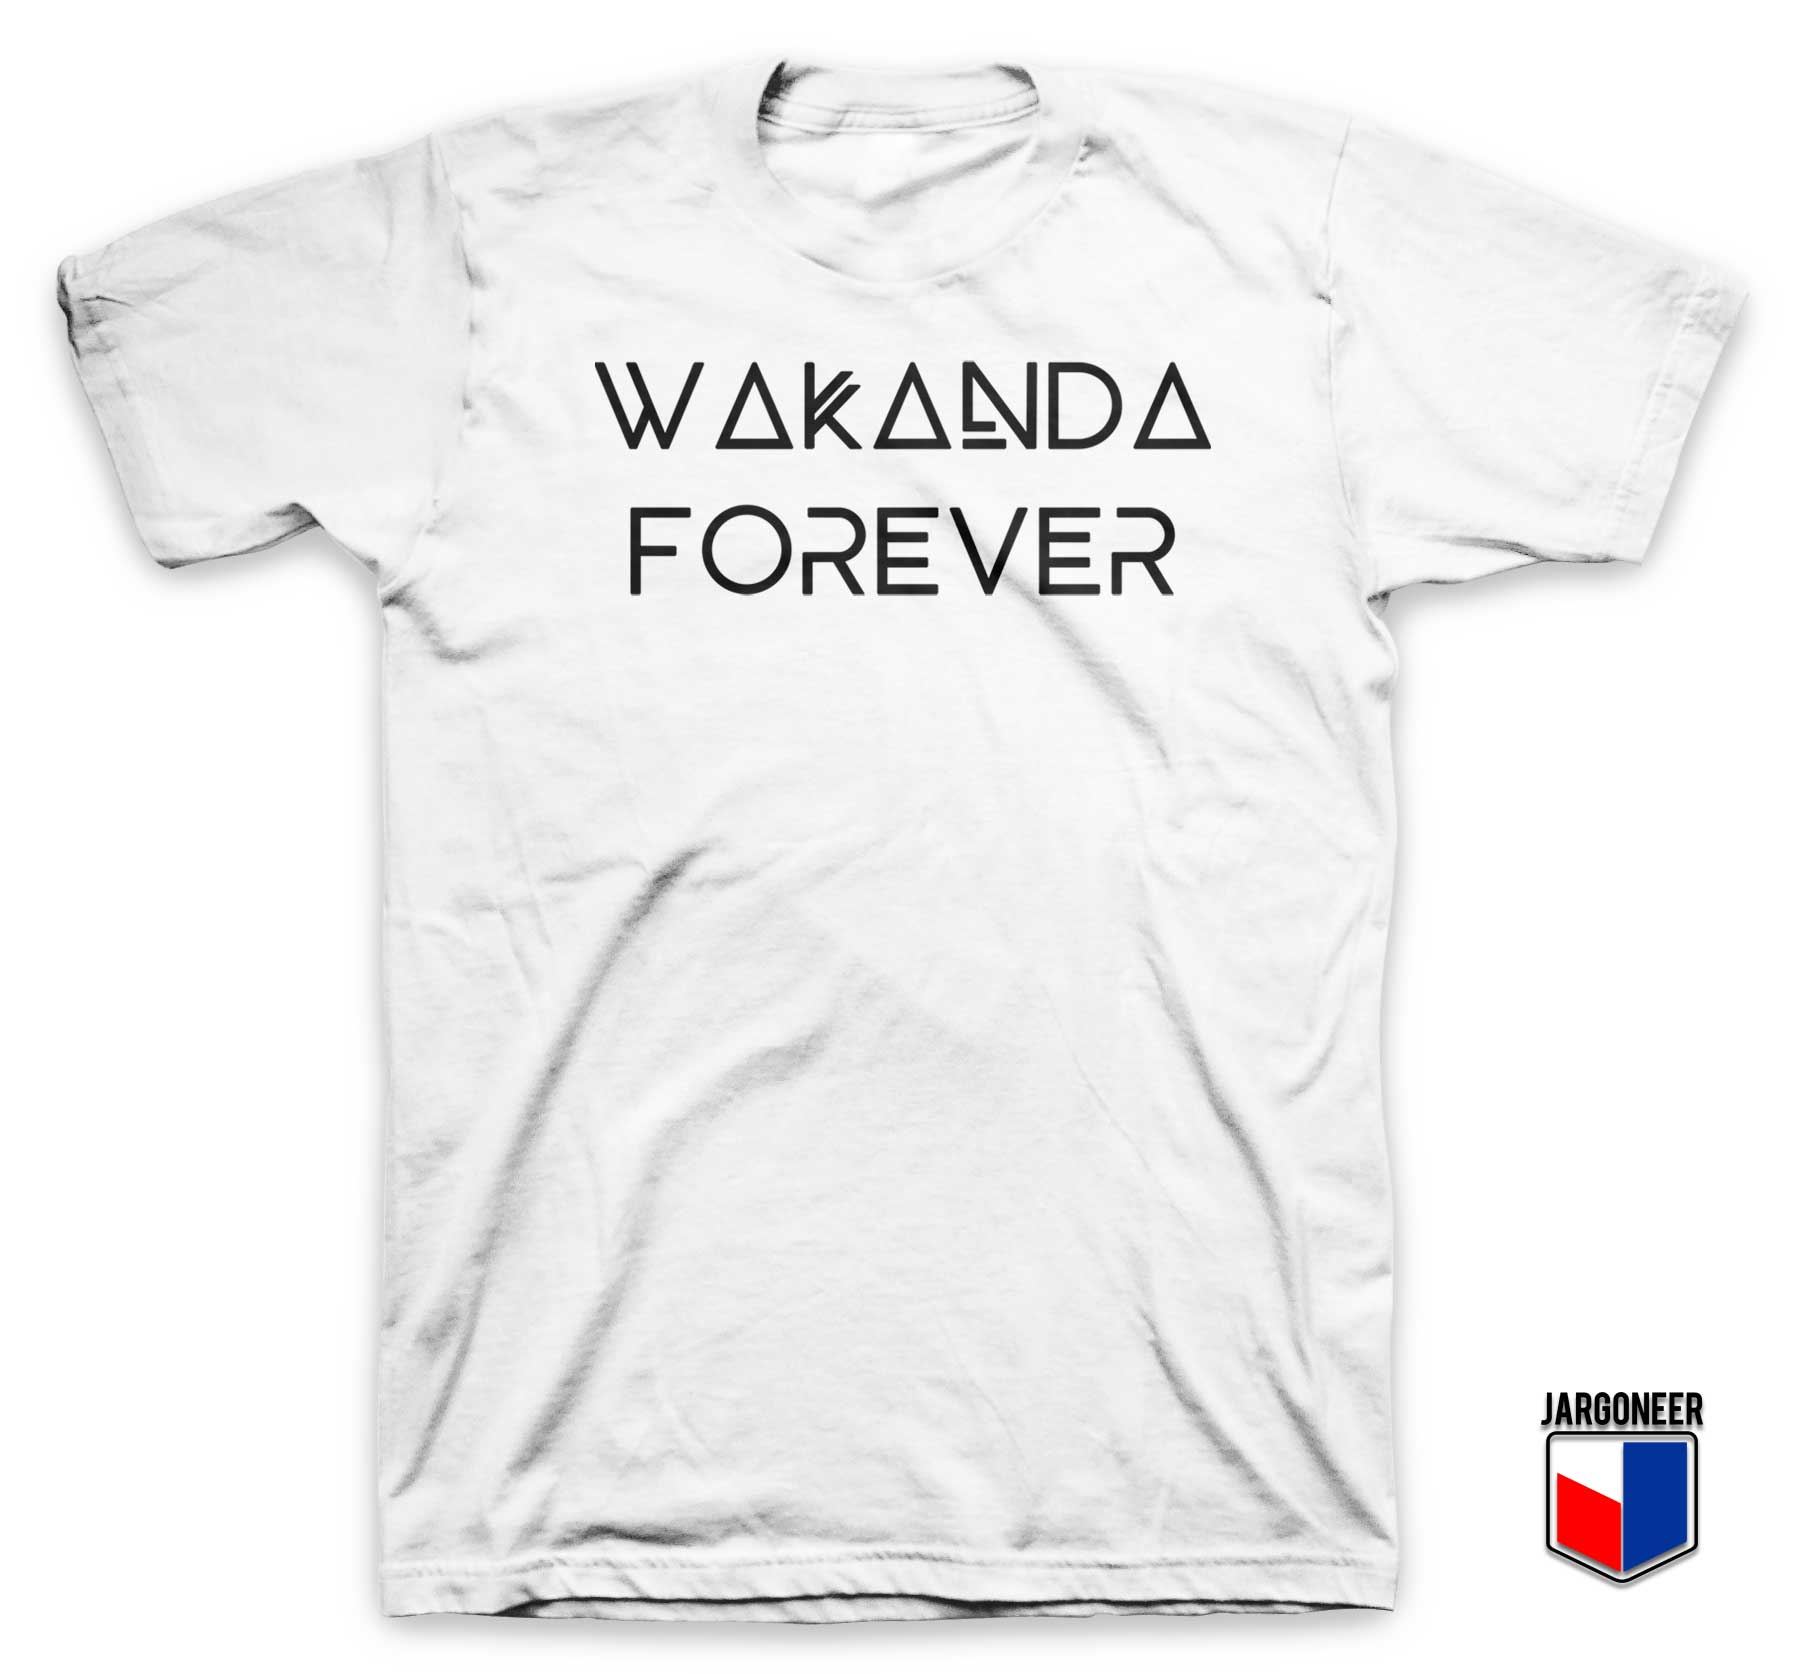 Wakanda Forever T Shirt - Shop Unique Graphic Cool Shirt Designs